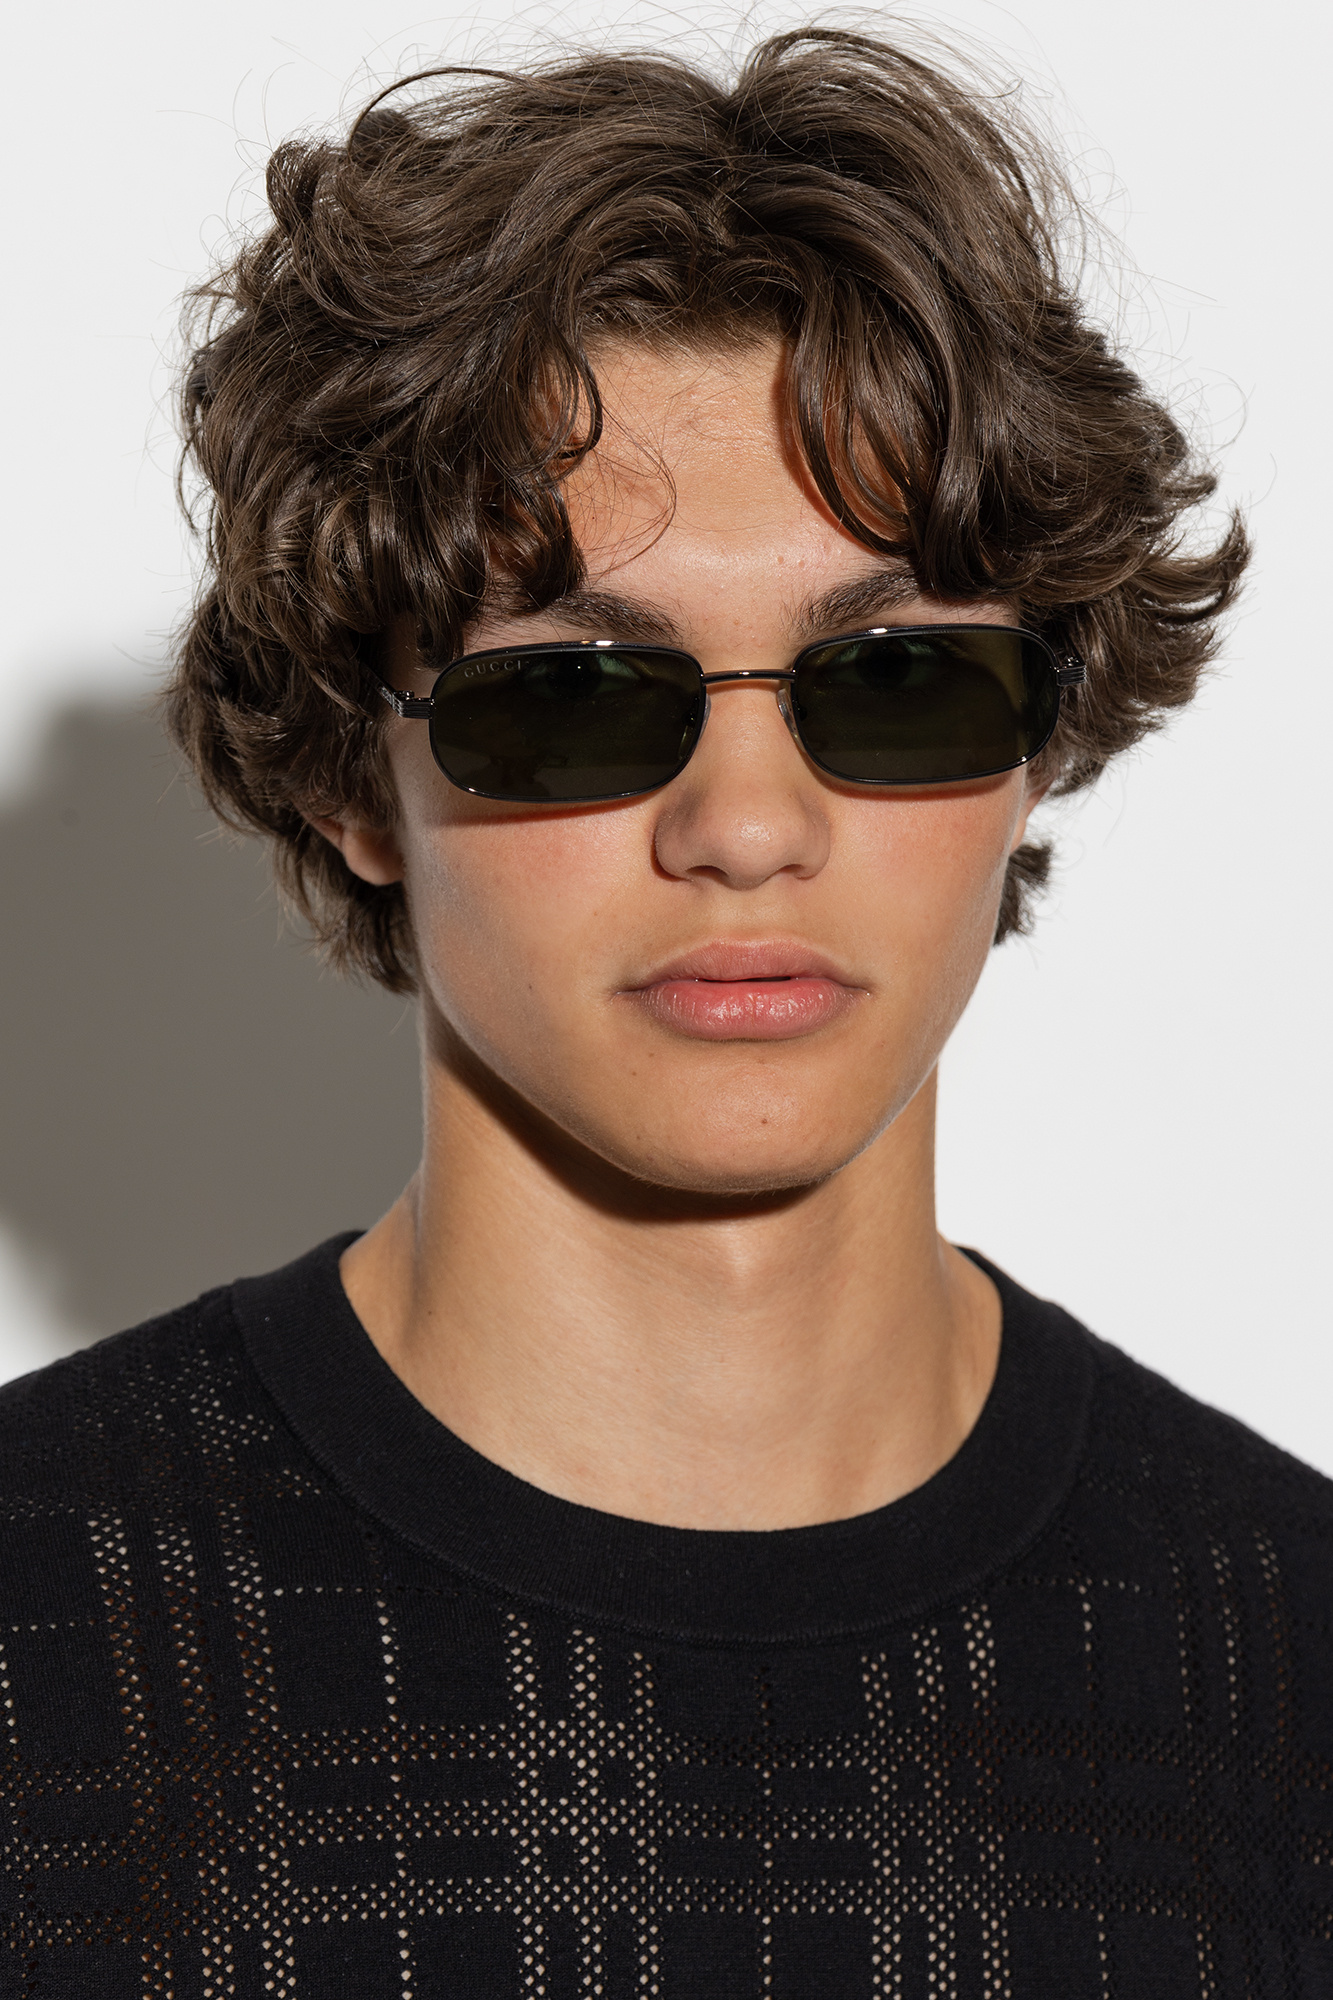 Gucci Burberry Eyewear Burberry Be4298 Top Black On Print Tb Red Sunglasses